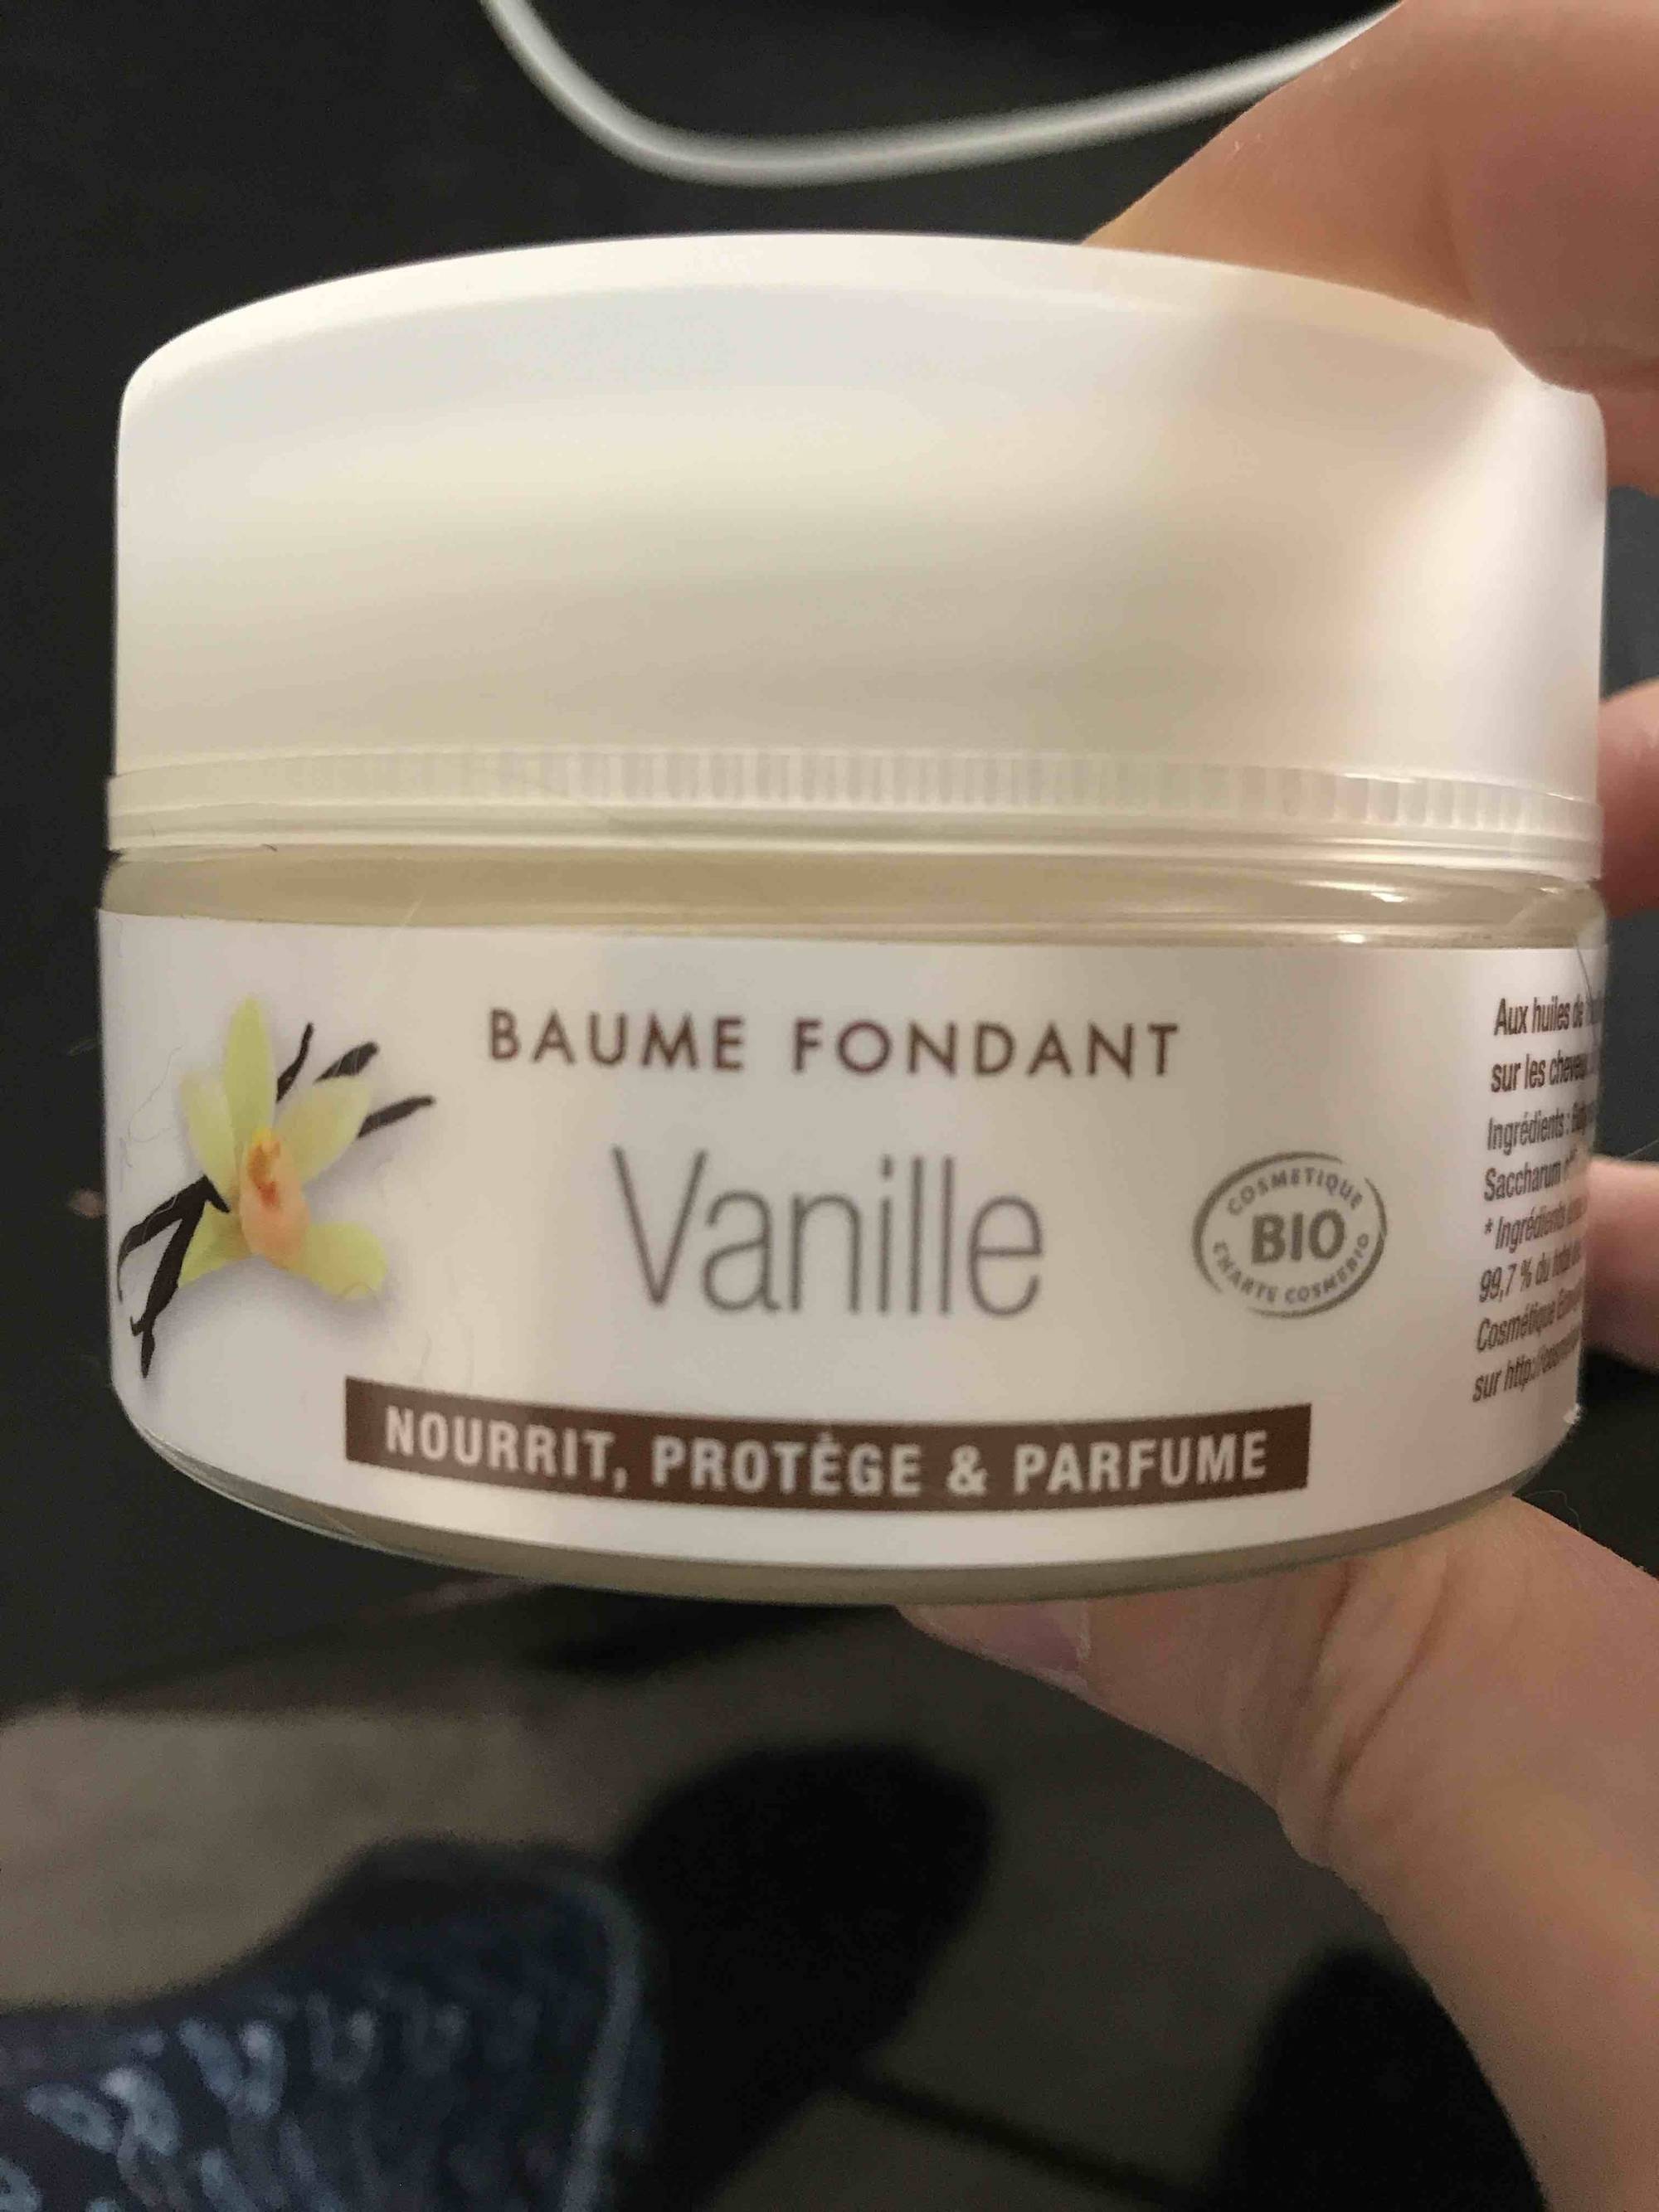 AROMA-ZONE - Baume fondant Vanille